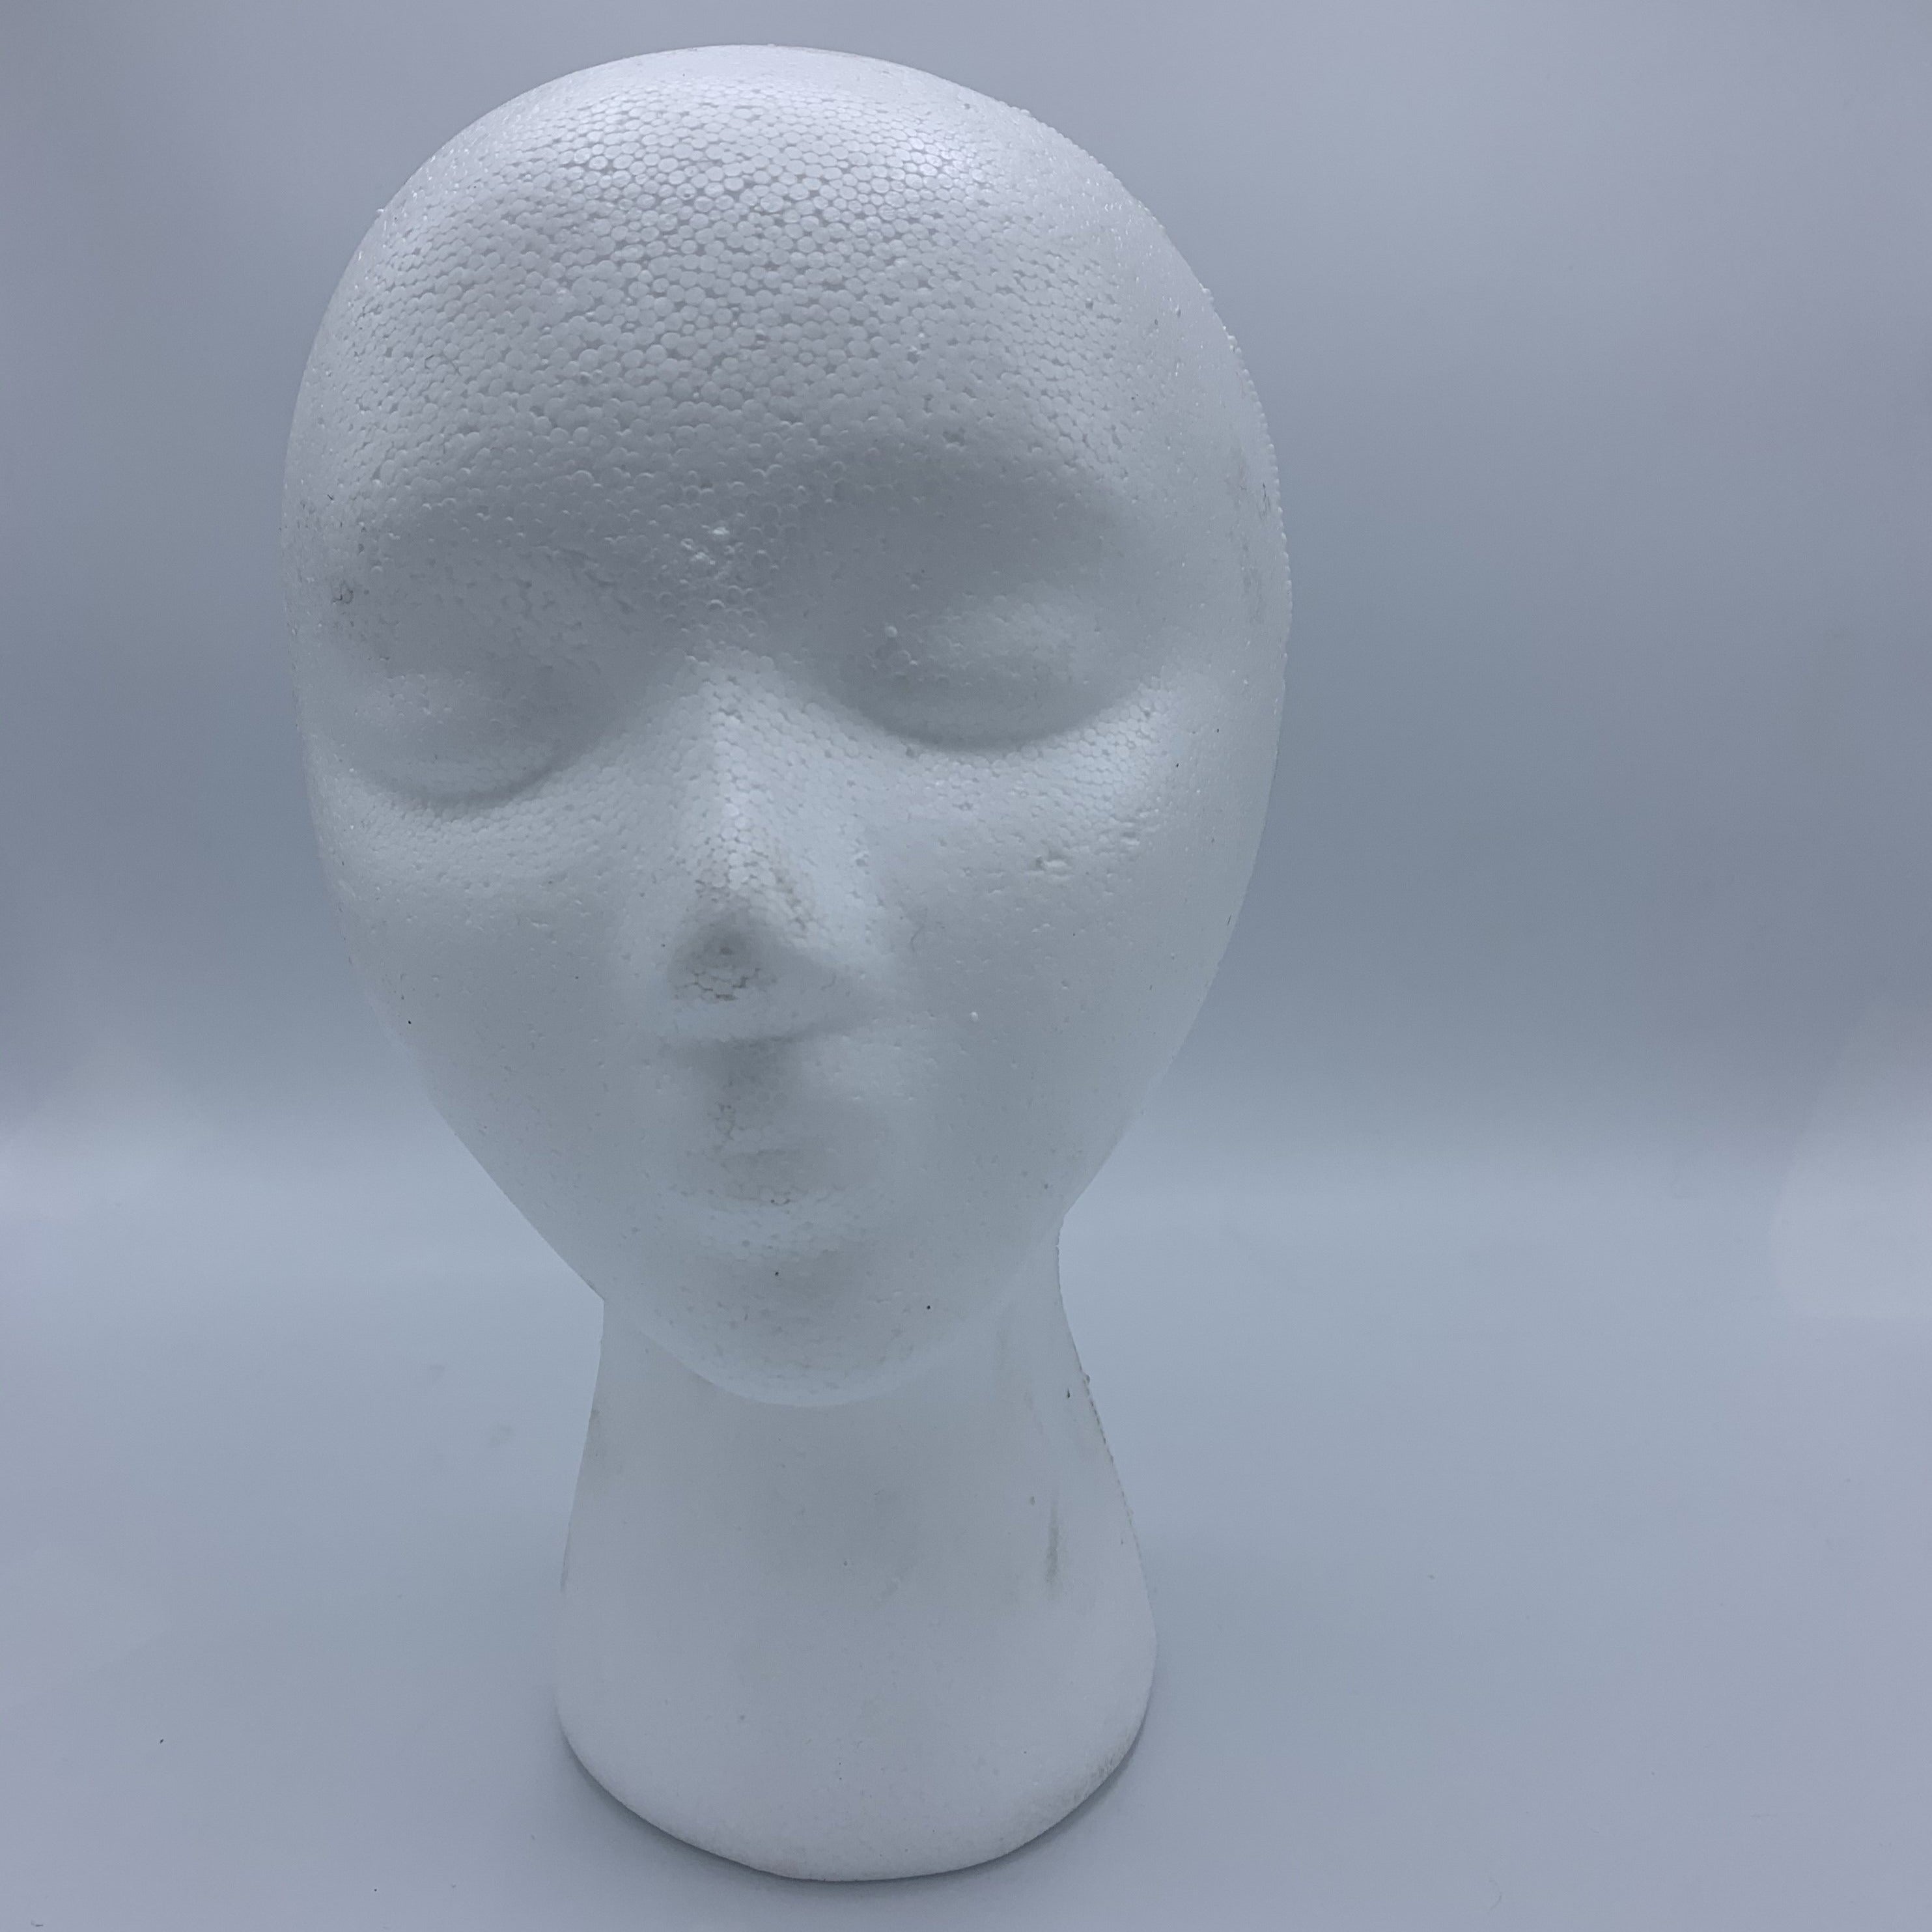 Styrofoam Mannequin Heads